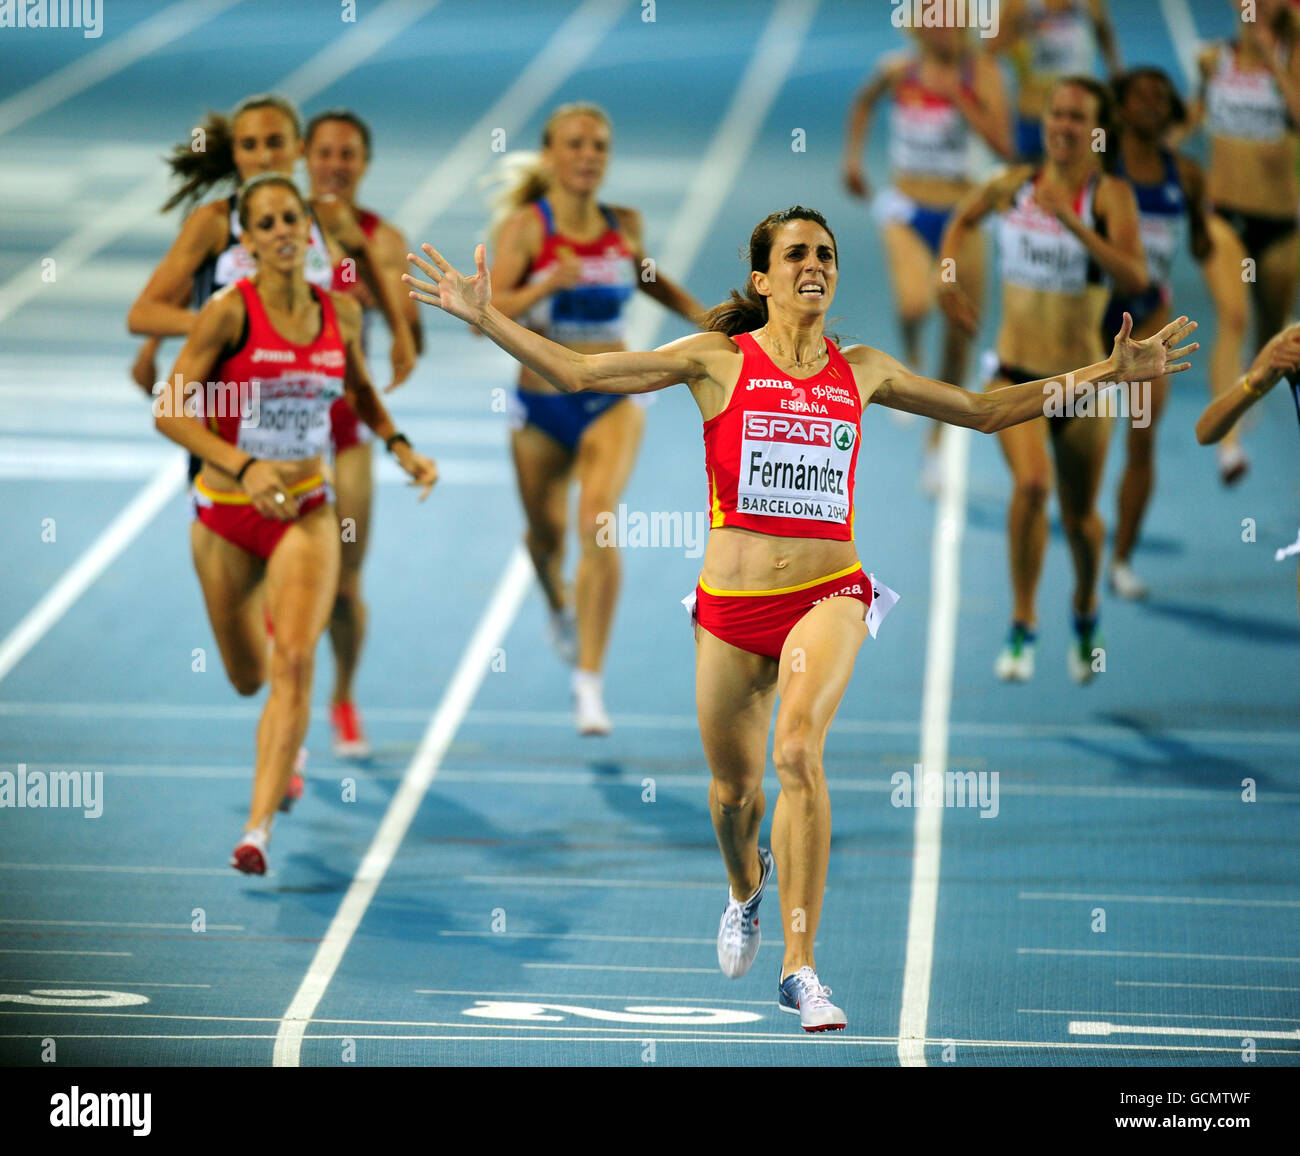 Athletics - IAAF European Championships 2010 - Day Six - Olympic Stadium. Spain's Nuria Fernandez celebrates winning Gold in the Women's 1500m Final Stock Photo